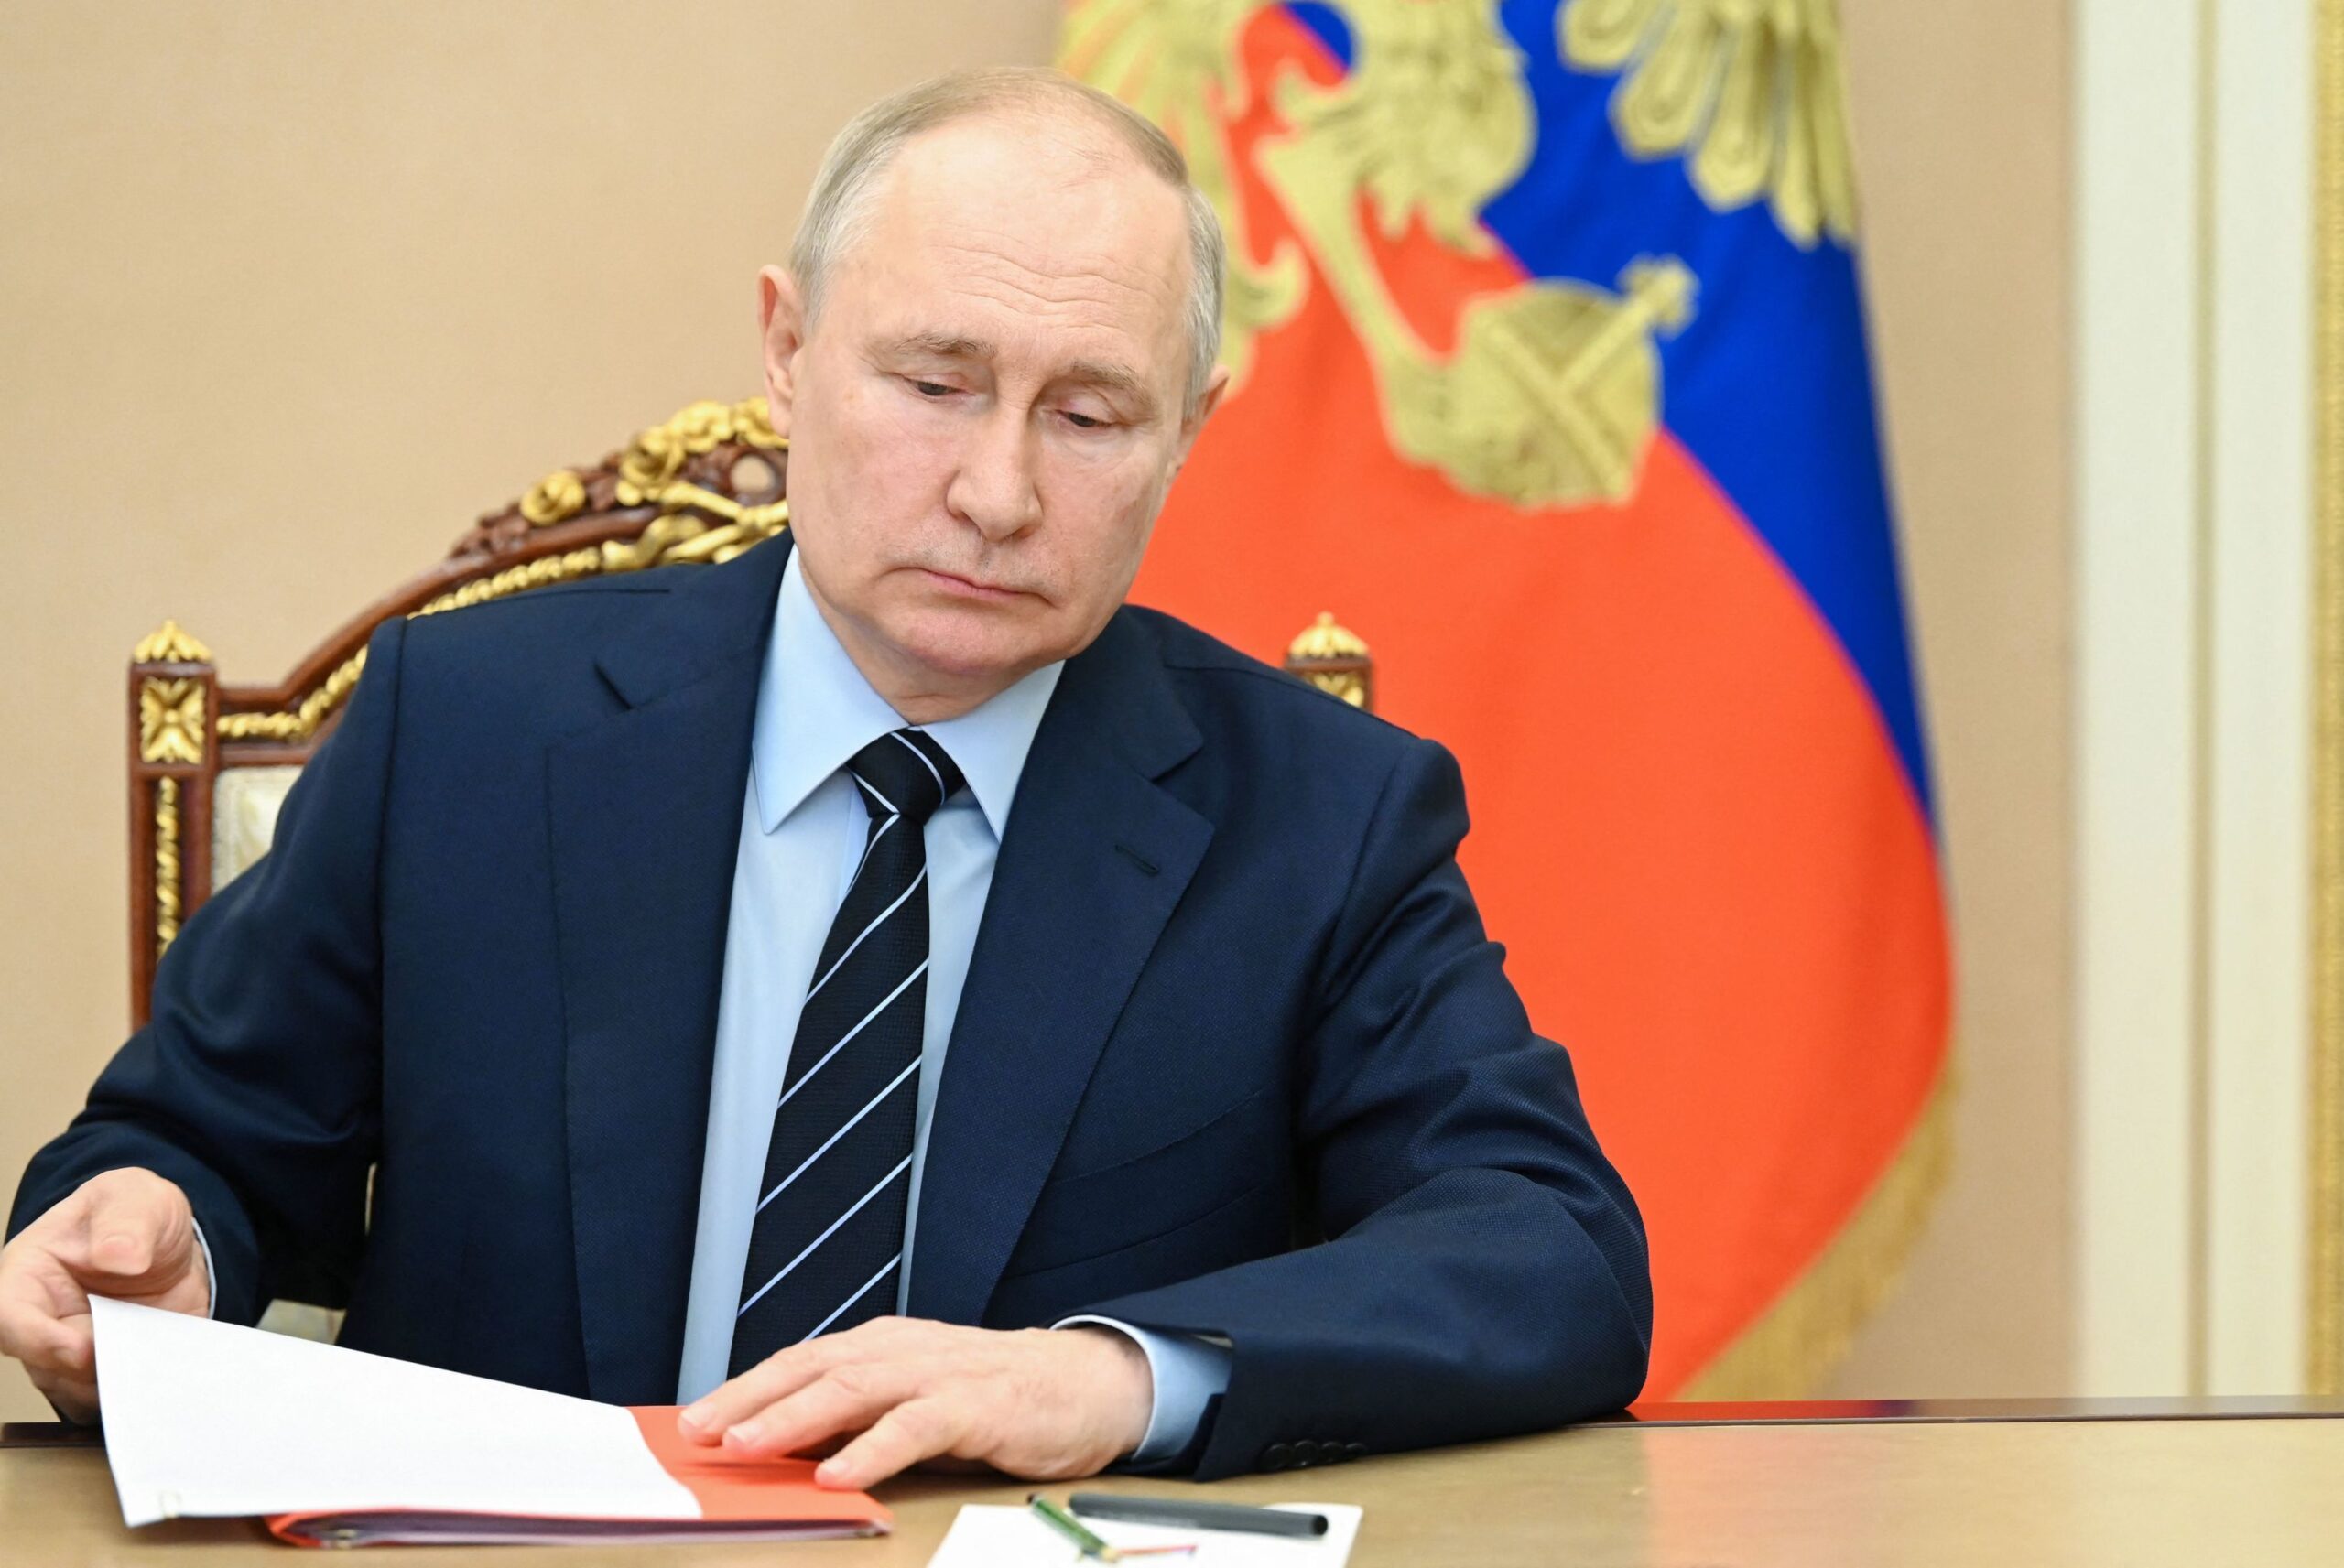 Por orden ejecutiva, Vladimir Putin ordenó “formaciones de voluntarios” para jurar lealtad al Kremlin.